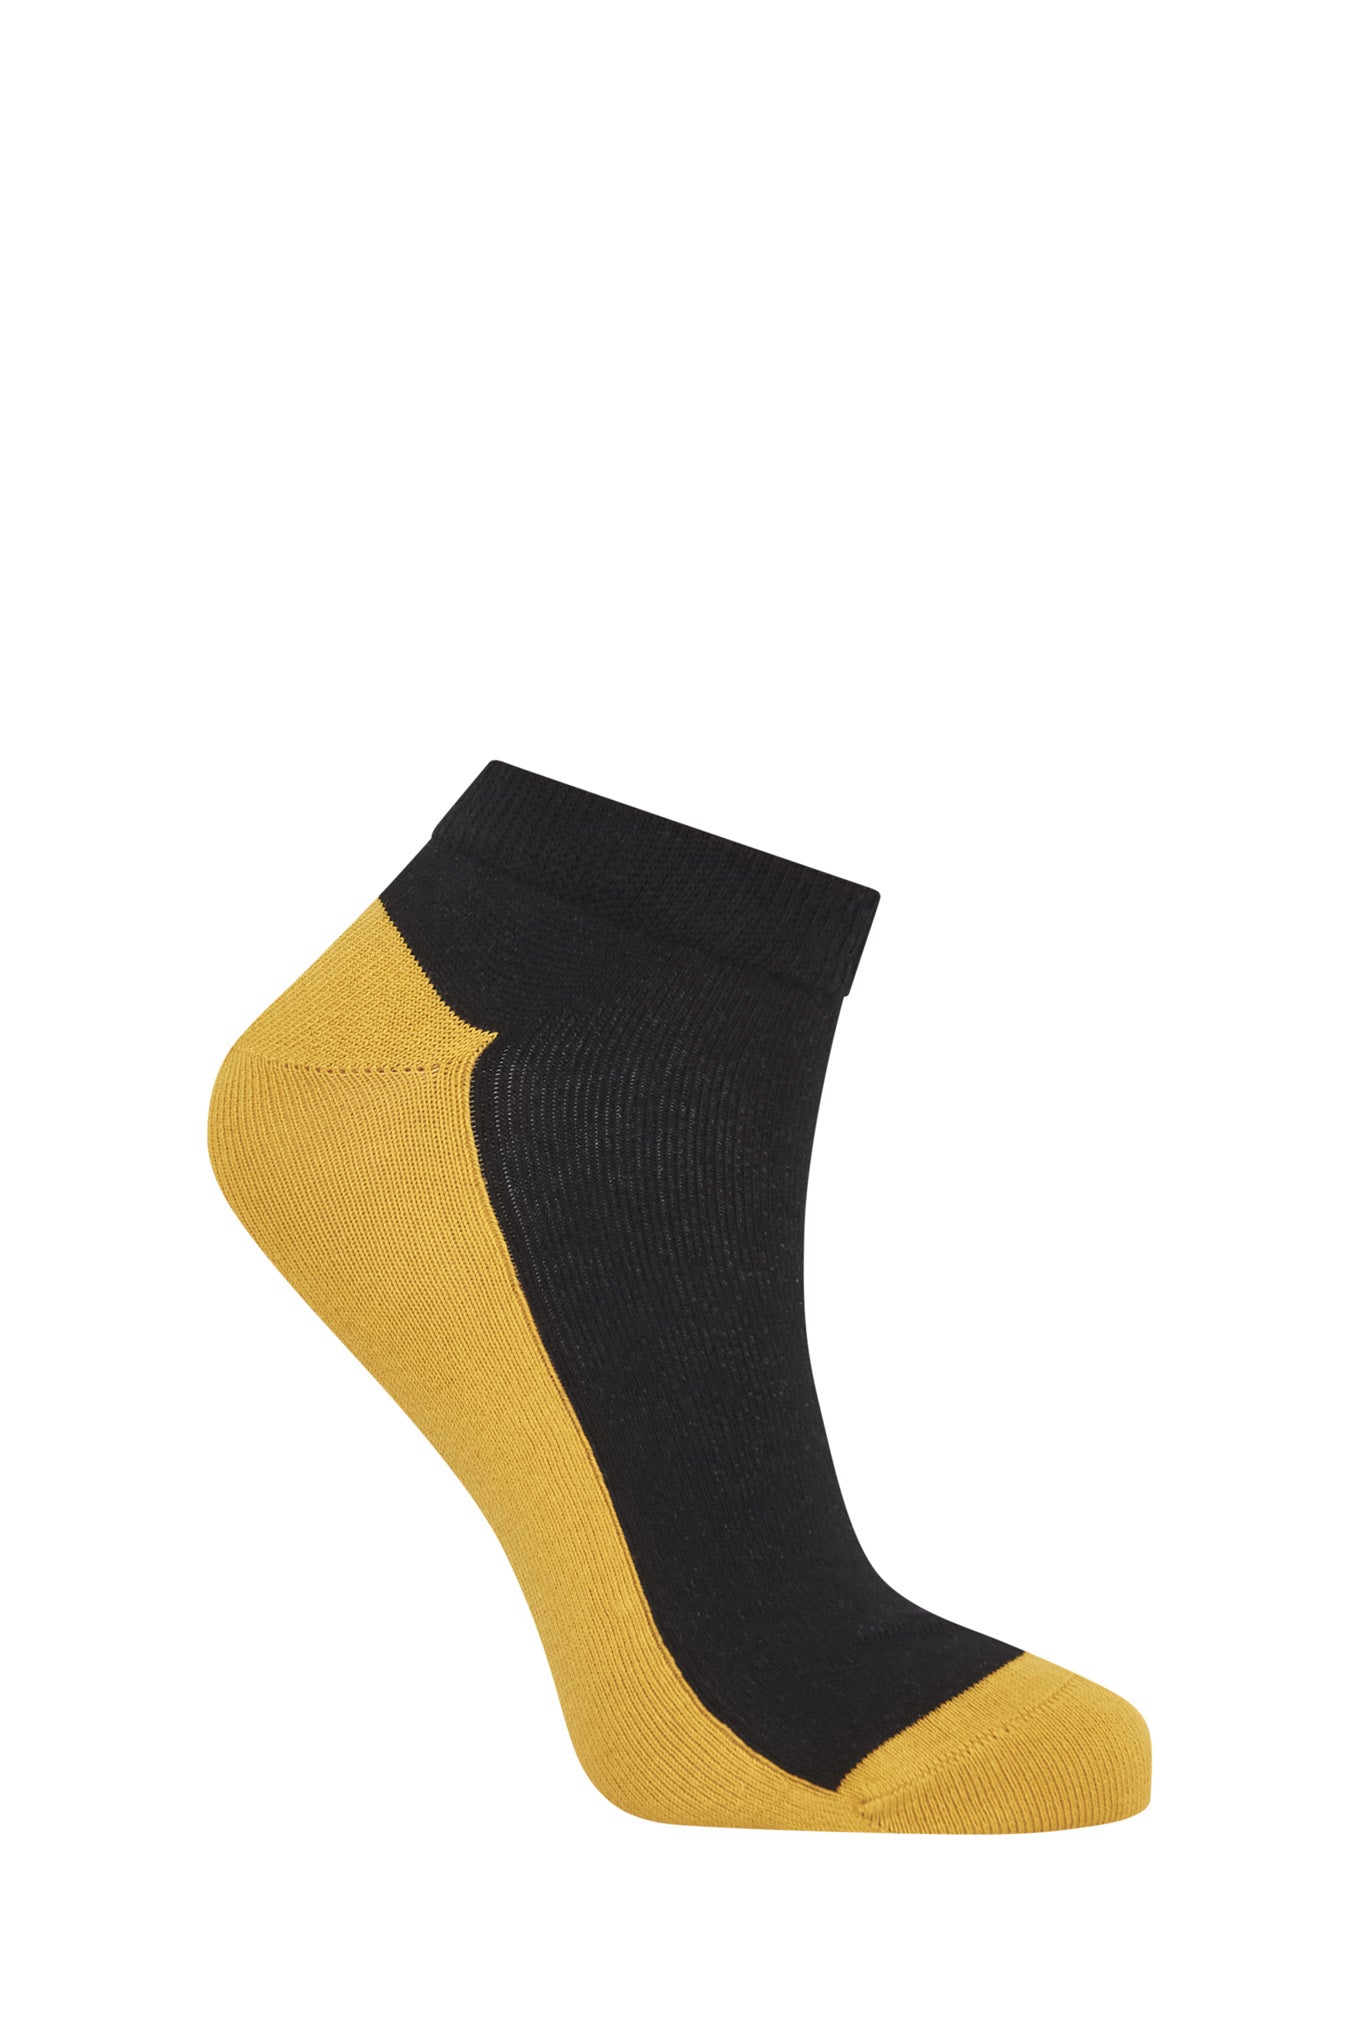 ANKLE - Organic Cotton Socks Black